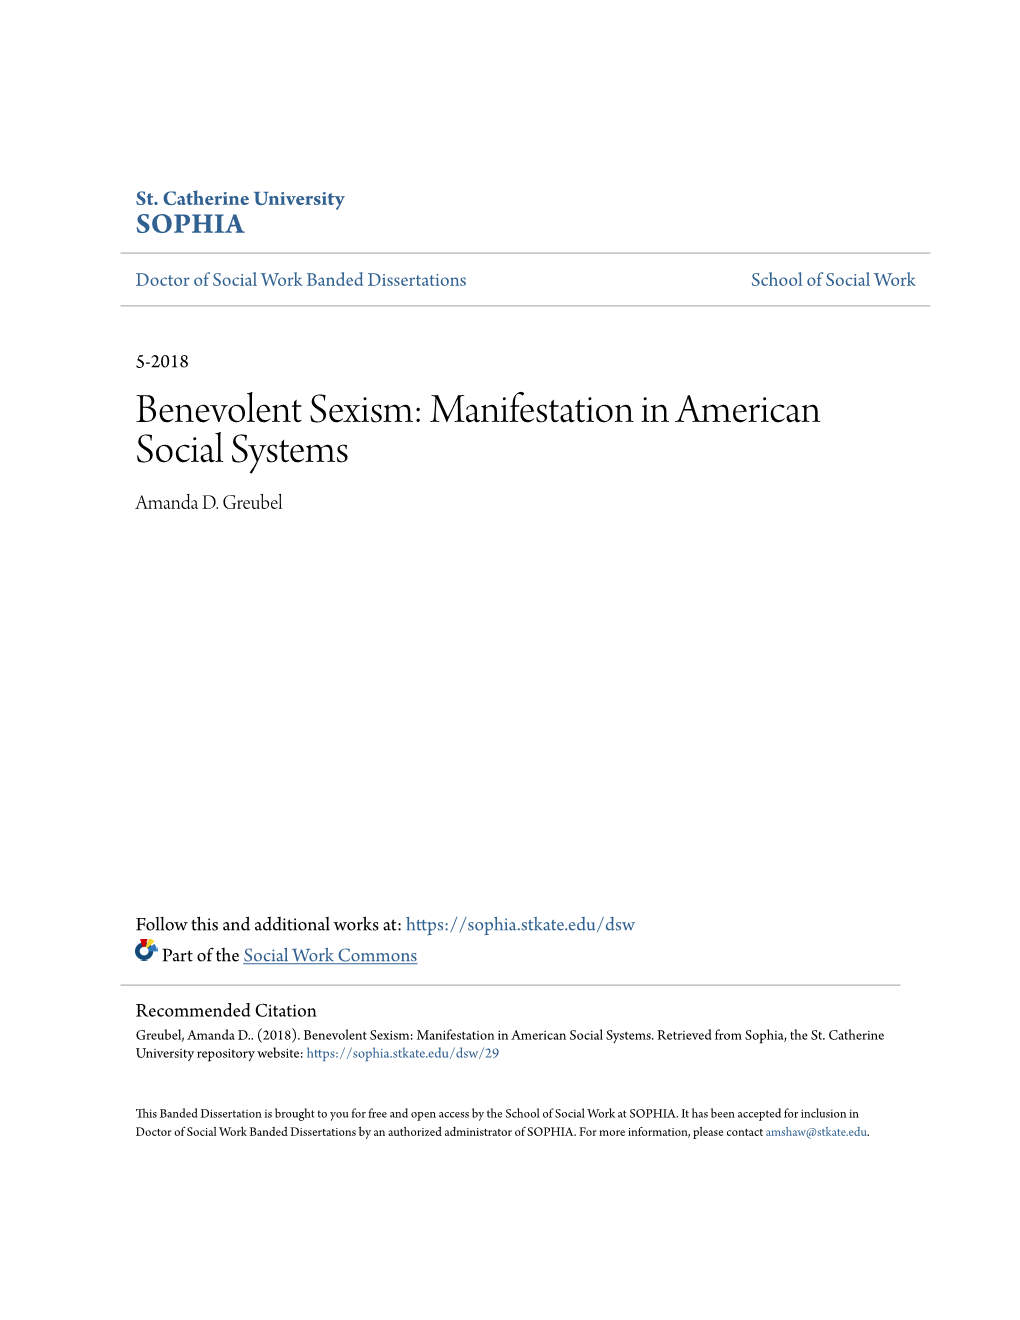 Benevolent Sexism: Manifestation in American Social Systems Amanda D